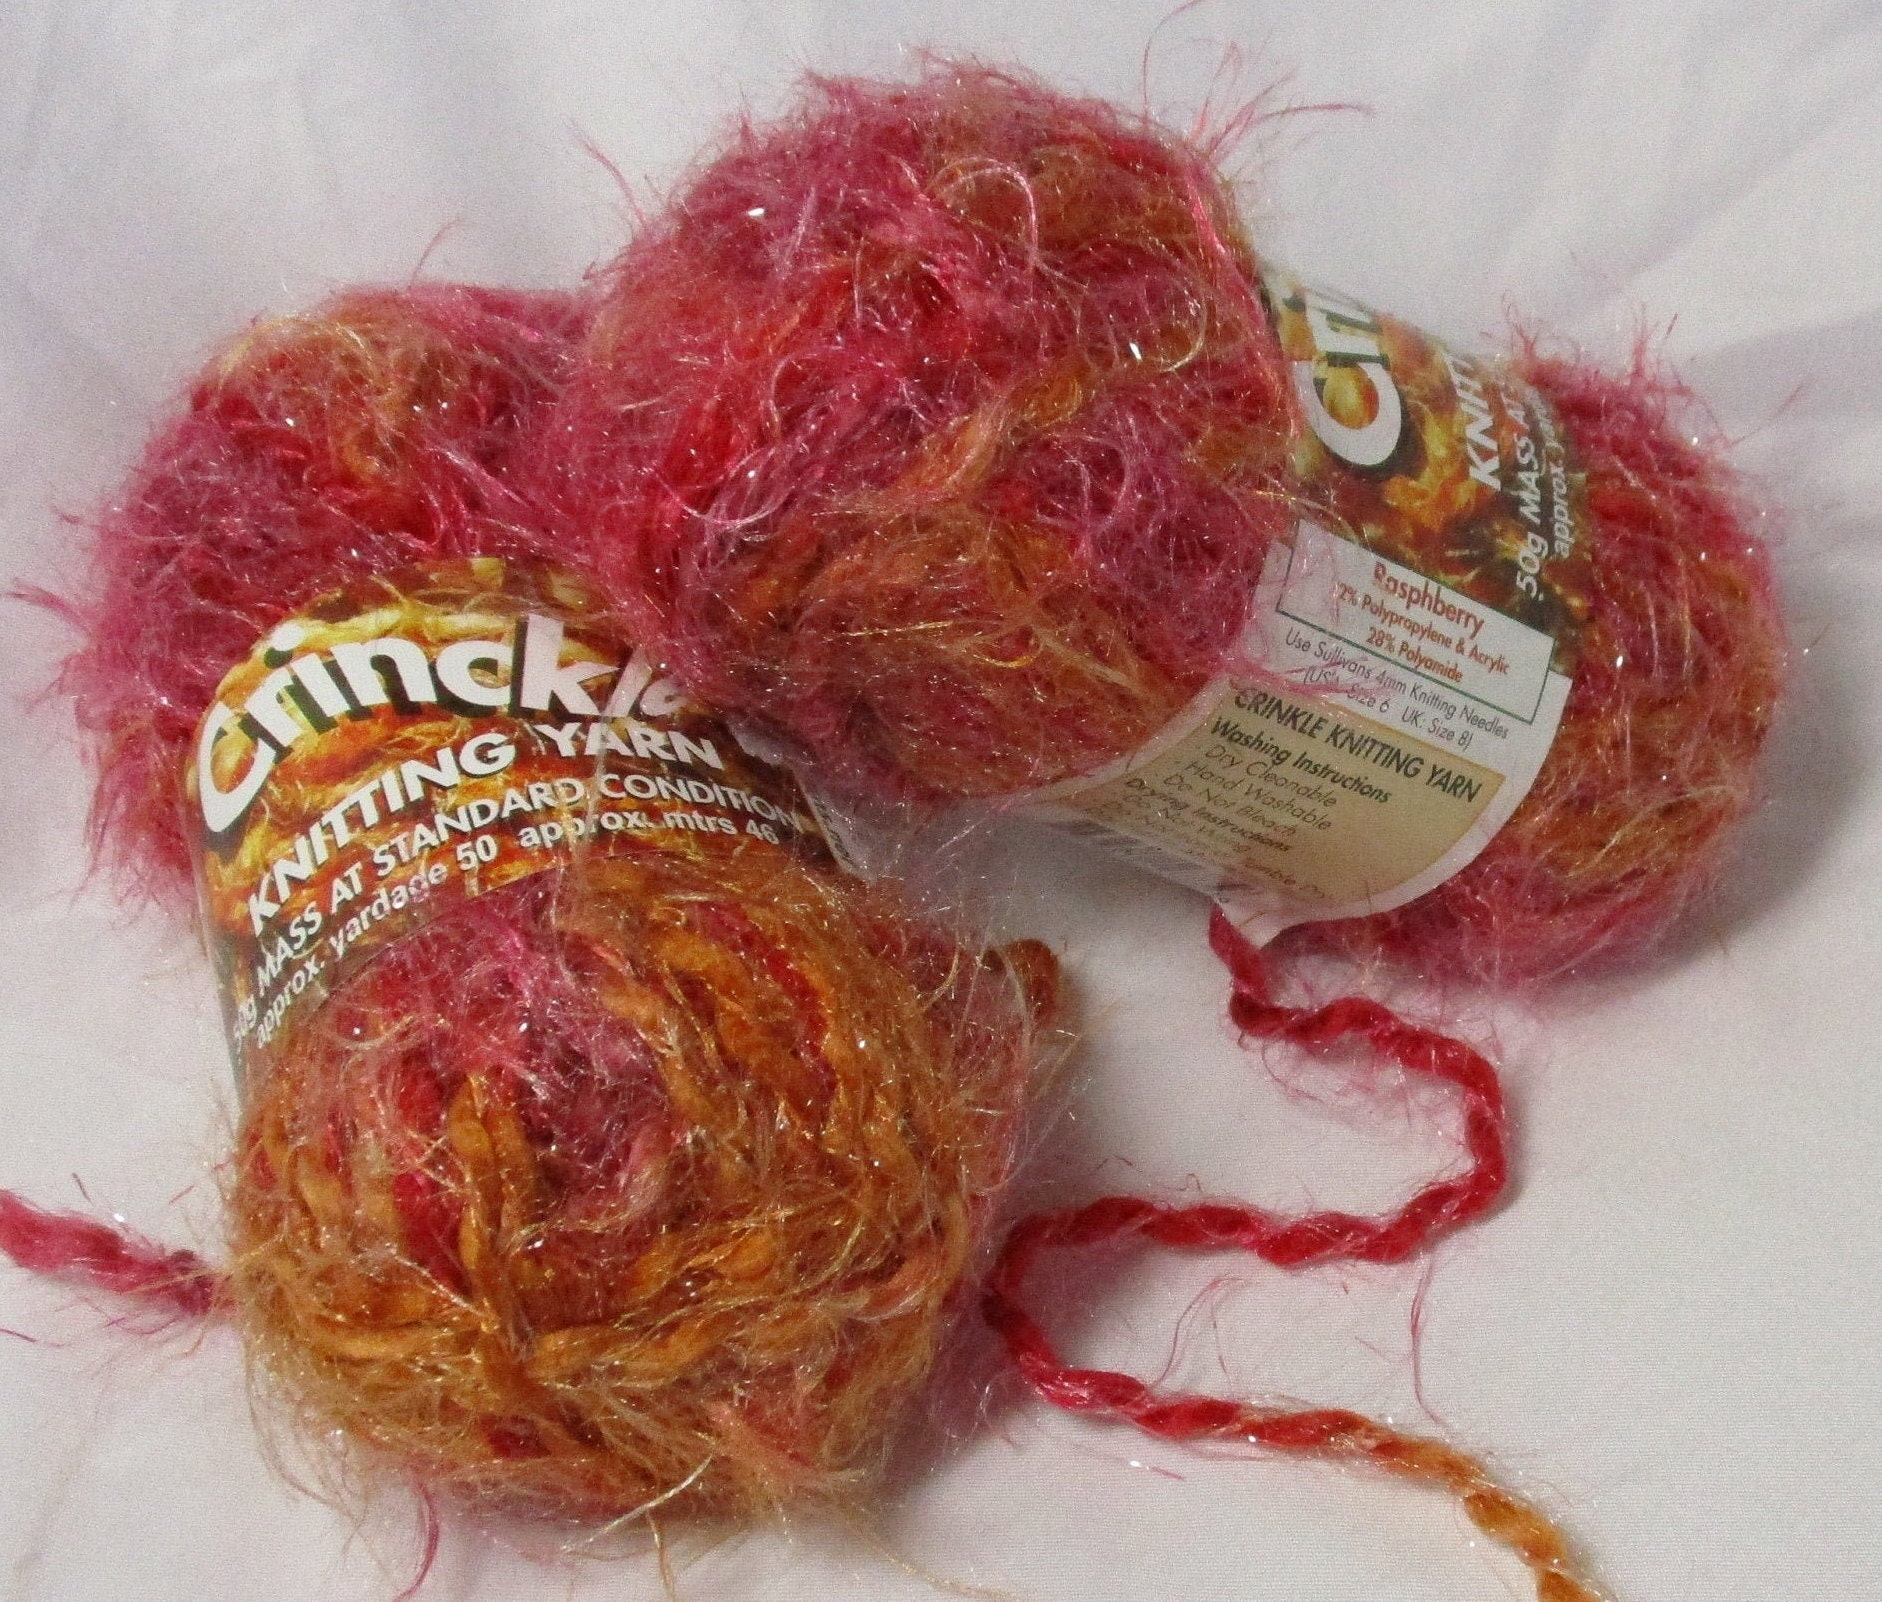 Sullivans Crochet & Knitting Yarn 50gm Orange : Sullivans International